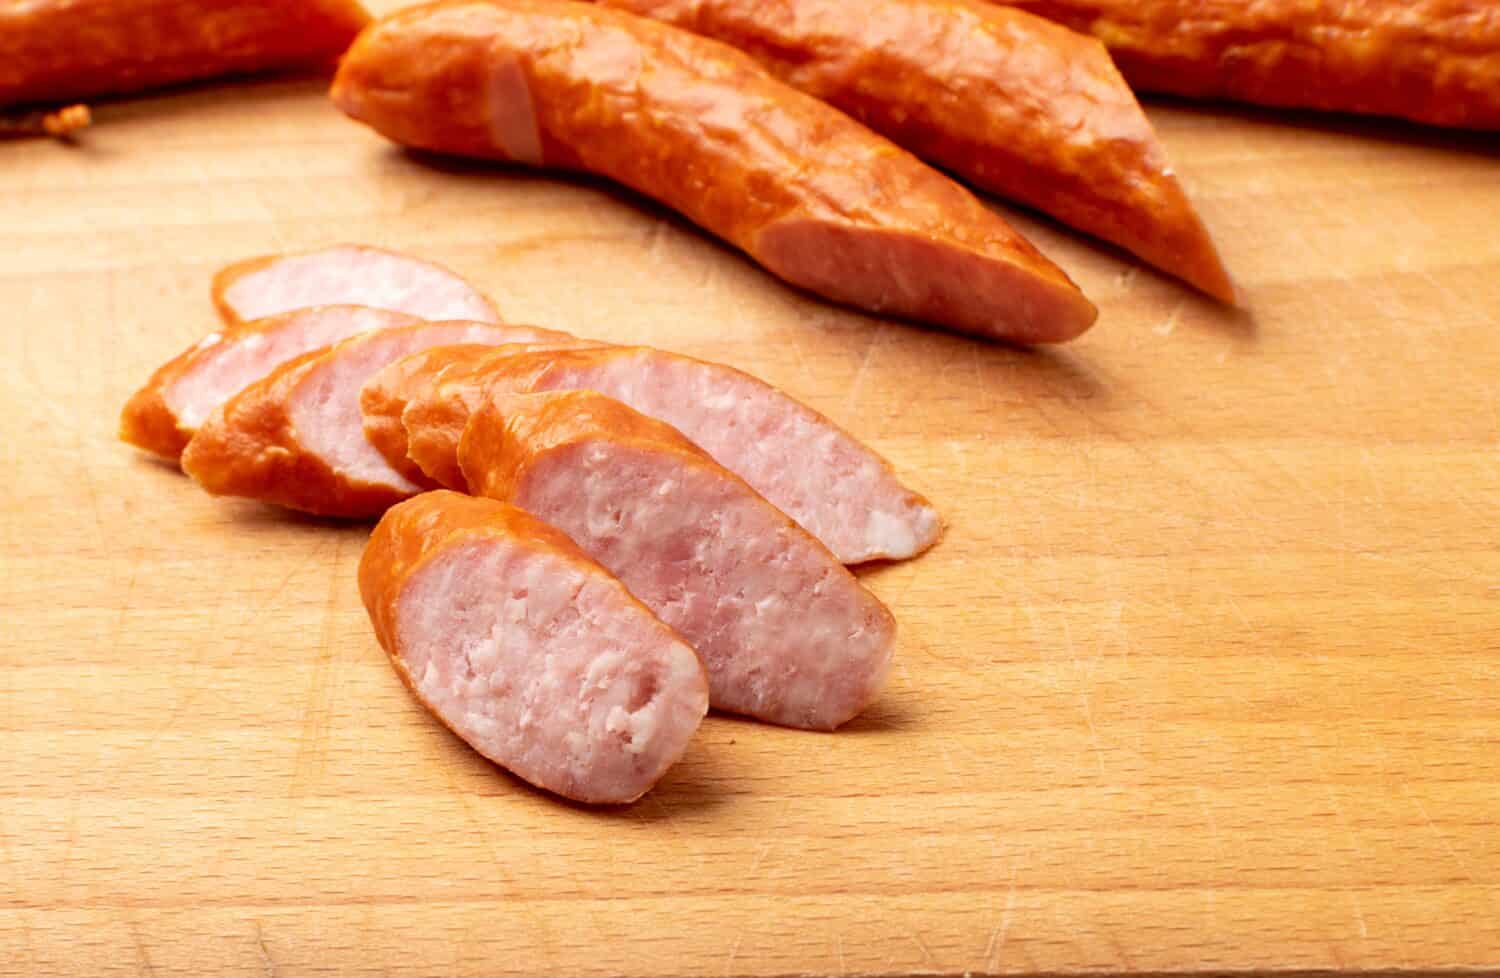 Smoked sausage cut. Hunting salami slices, chorizo pieces, wurst, poland kielbasa, grilled frankfurt sausage, longaniza on wood background